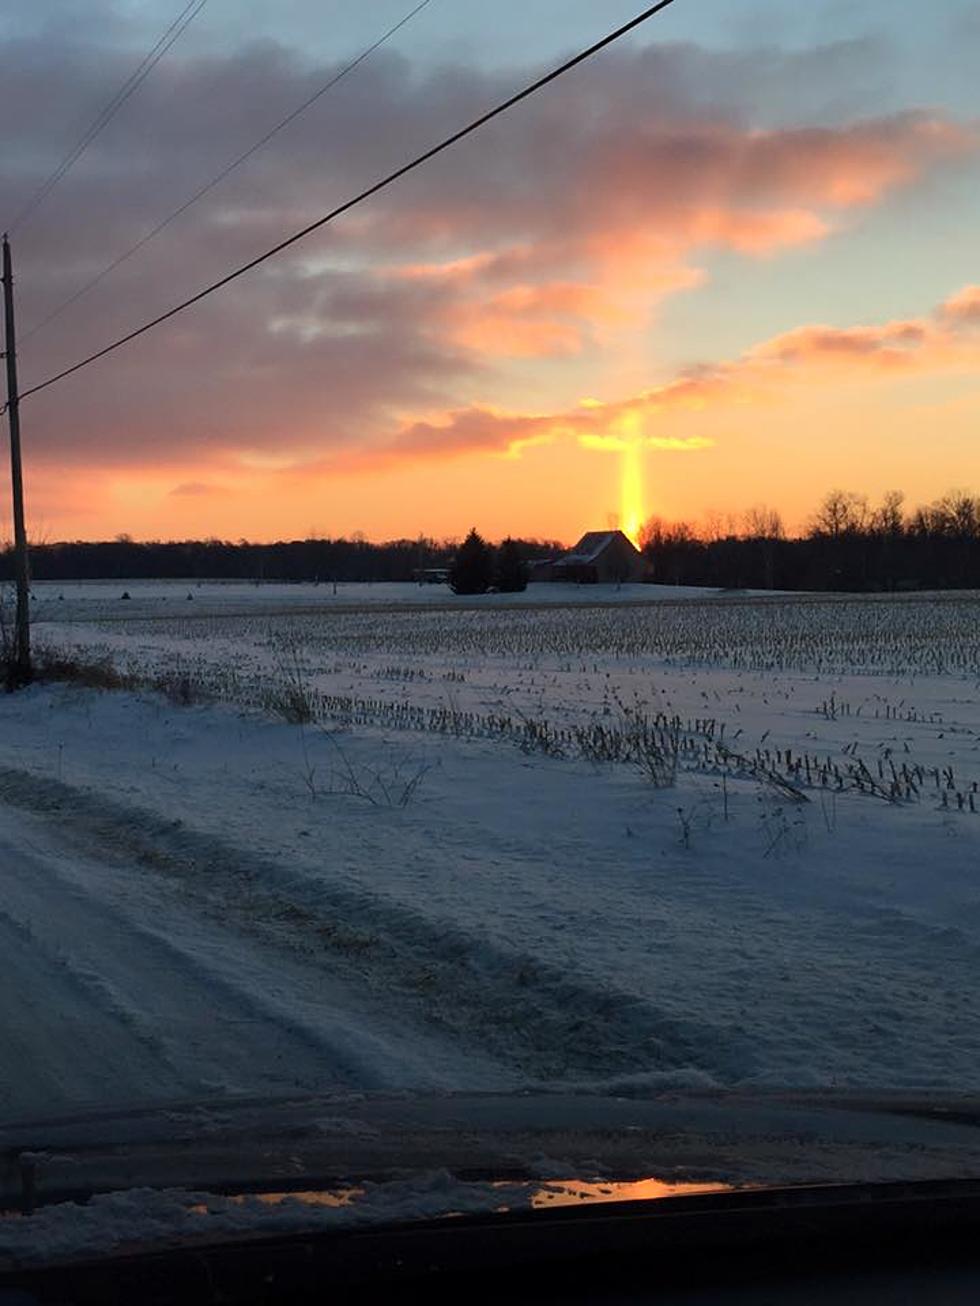 Buchanan, Michigan Sunrise Pic Goes Viral